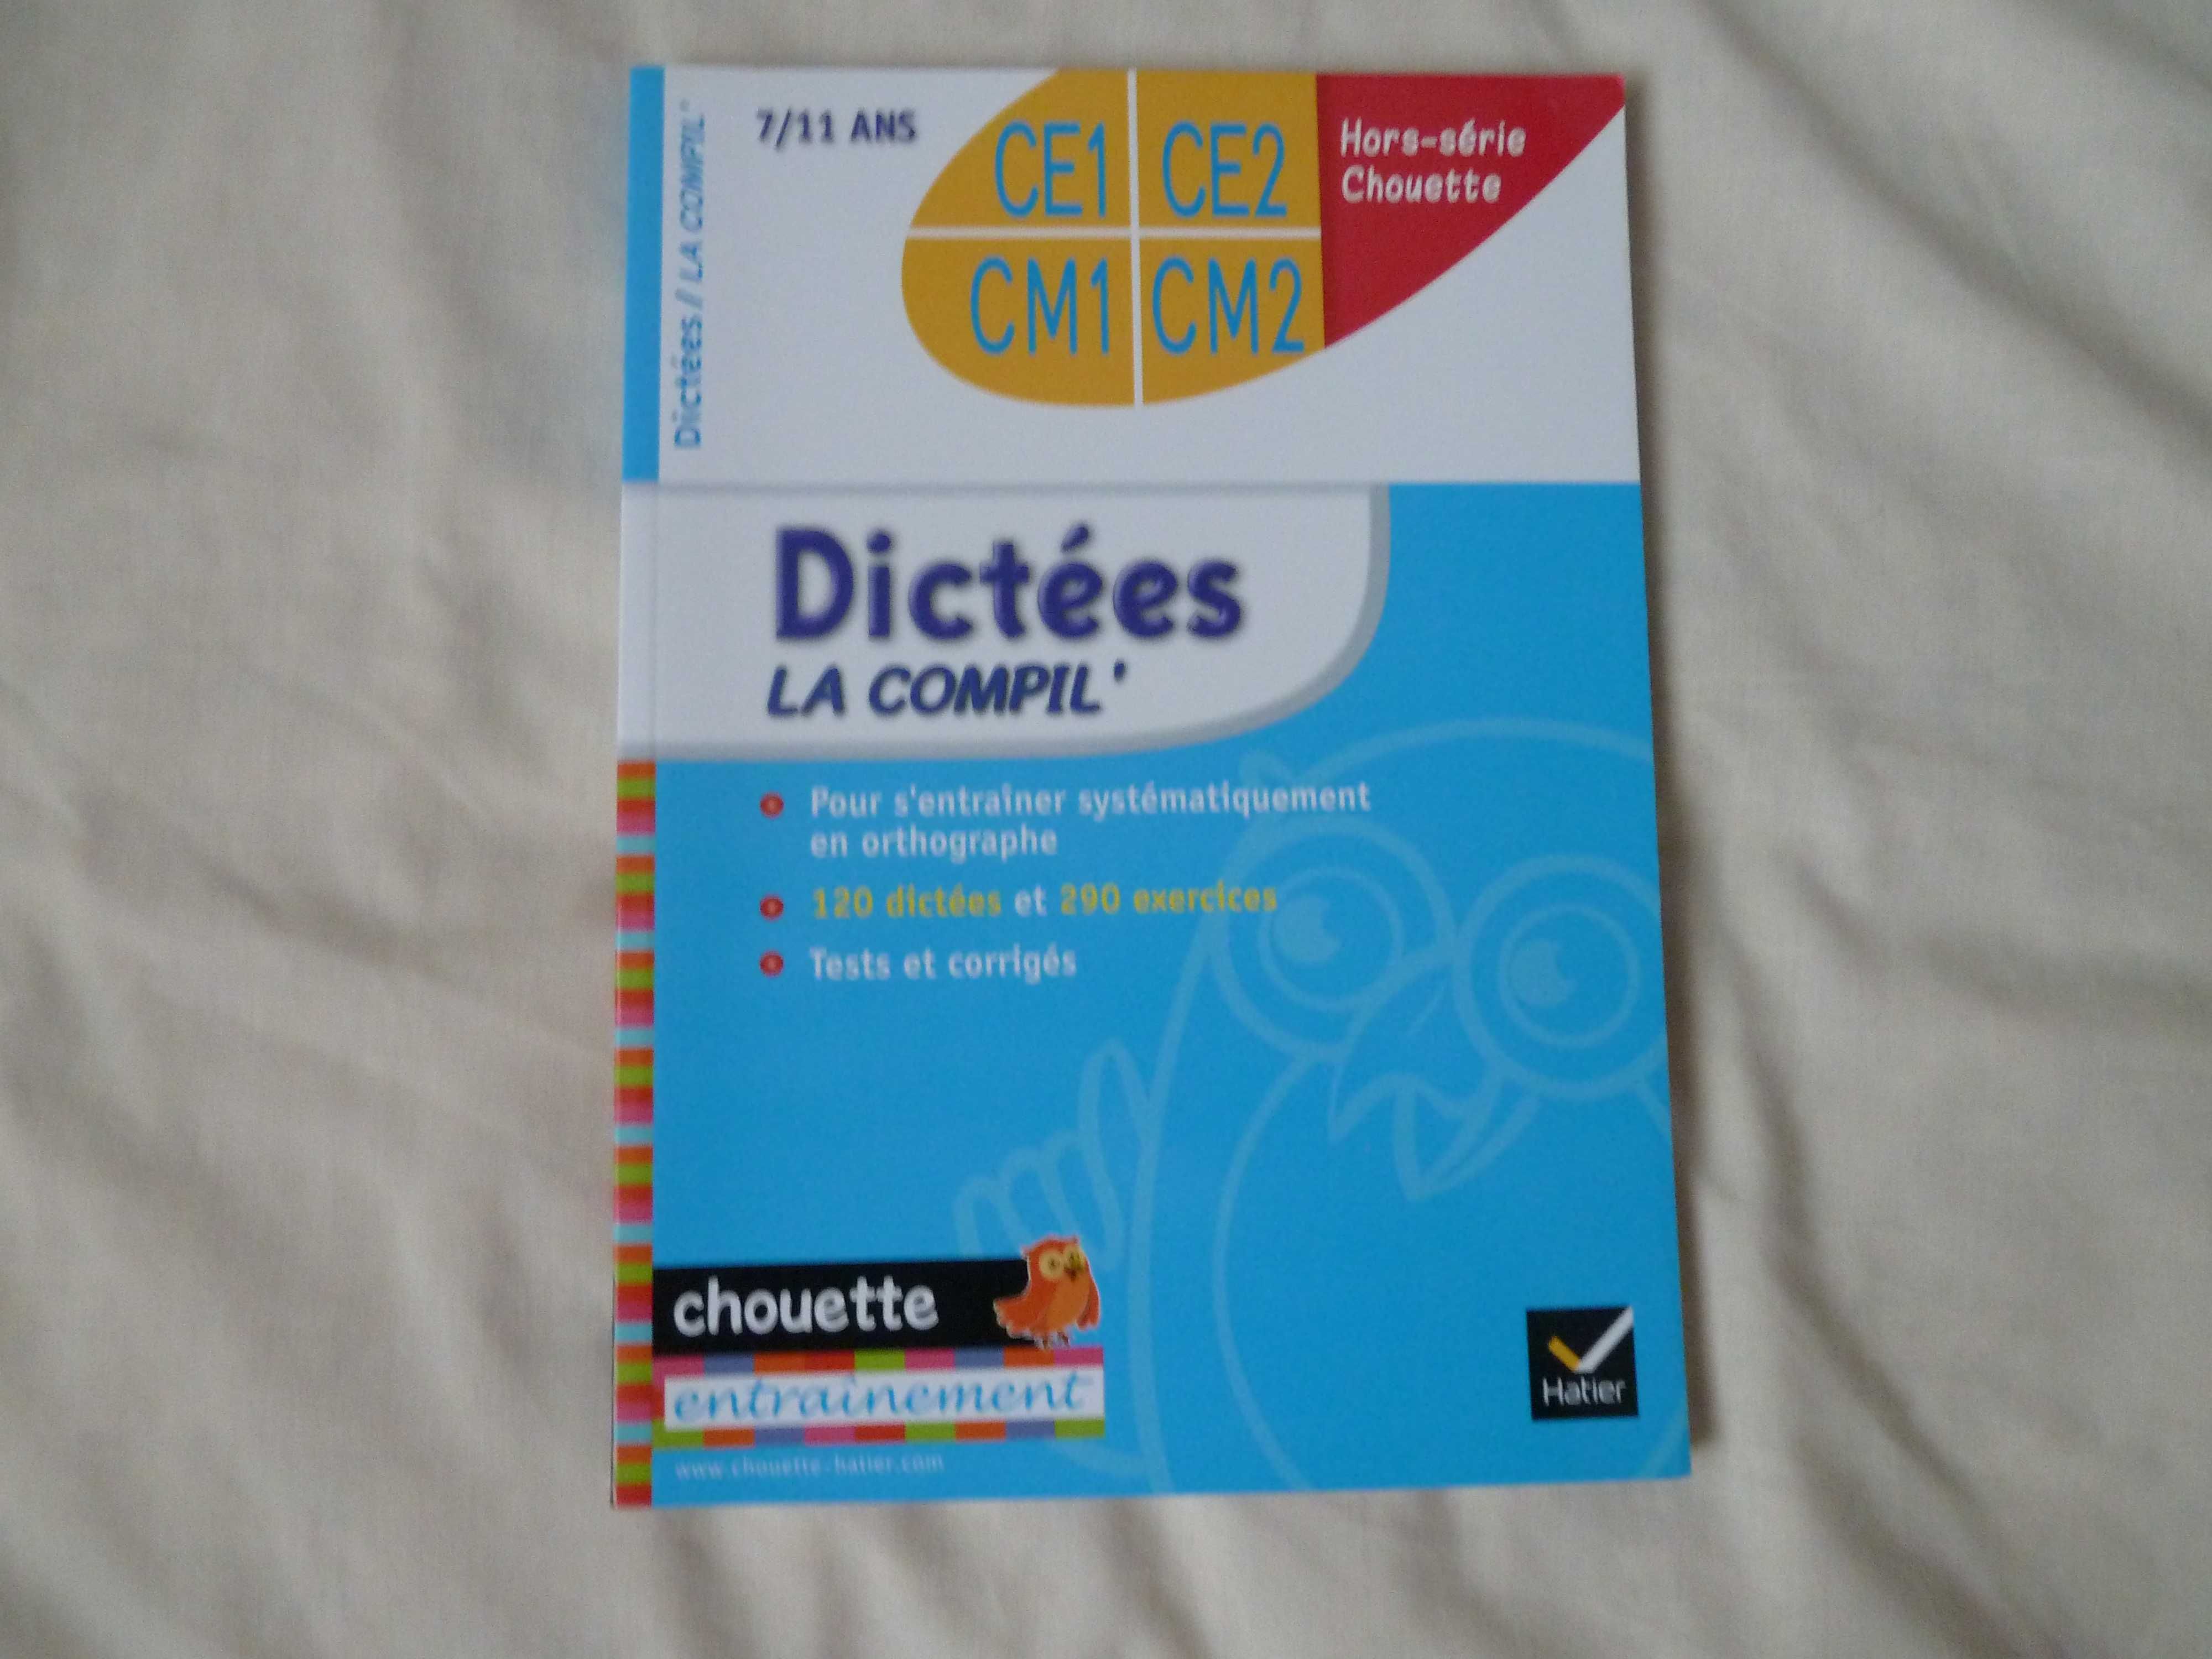 Bled CP/CE1 i Dictees la Compil do nauki francuskiego - nowe